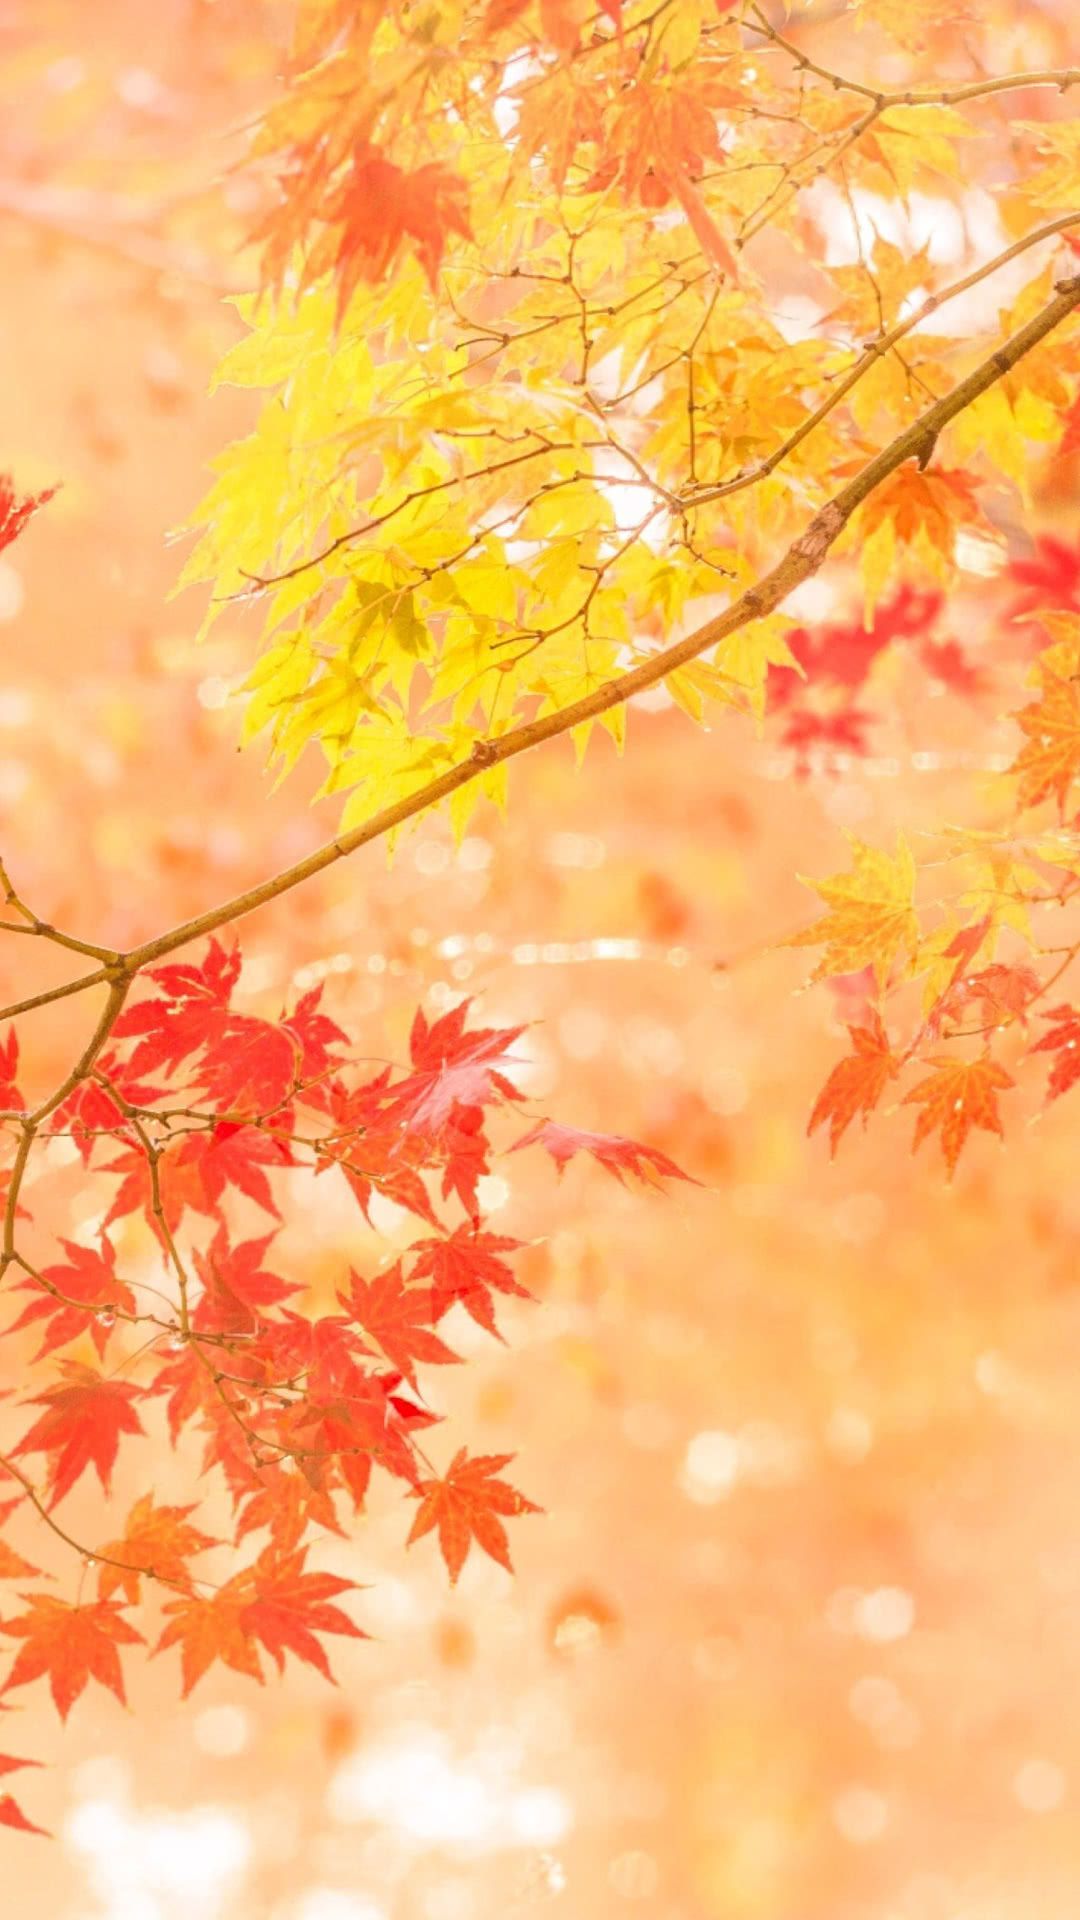 Girly Autumn Background Image. Apple wallpaper iphone, iPhone wallpaper, Background image